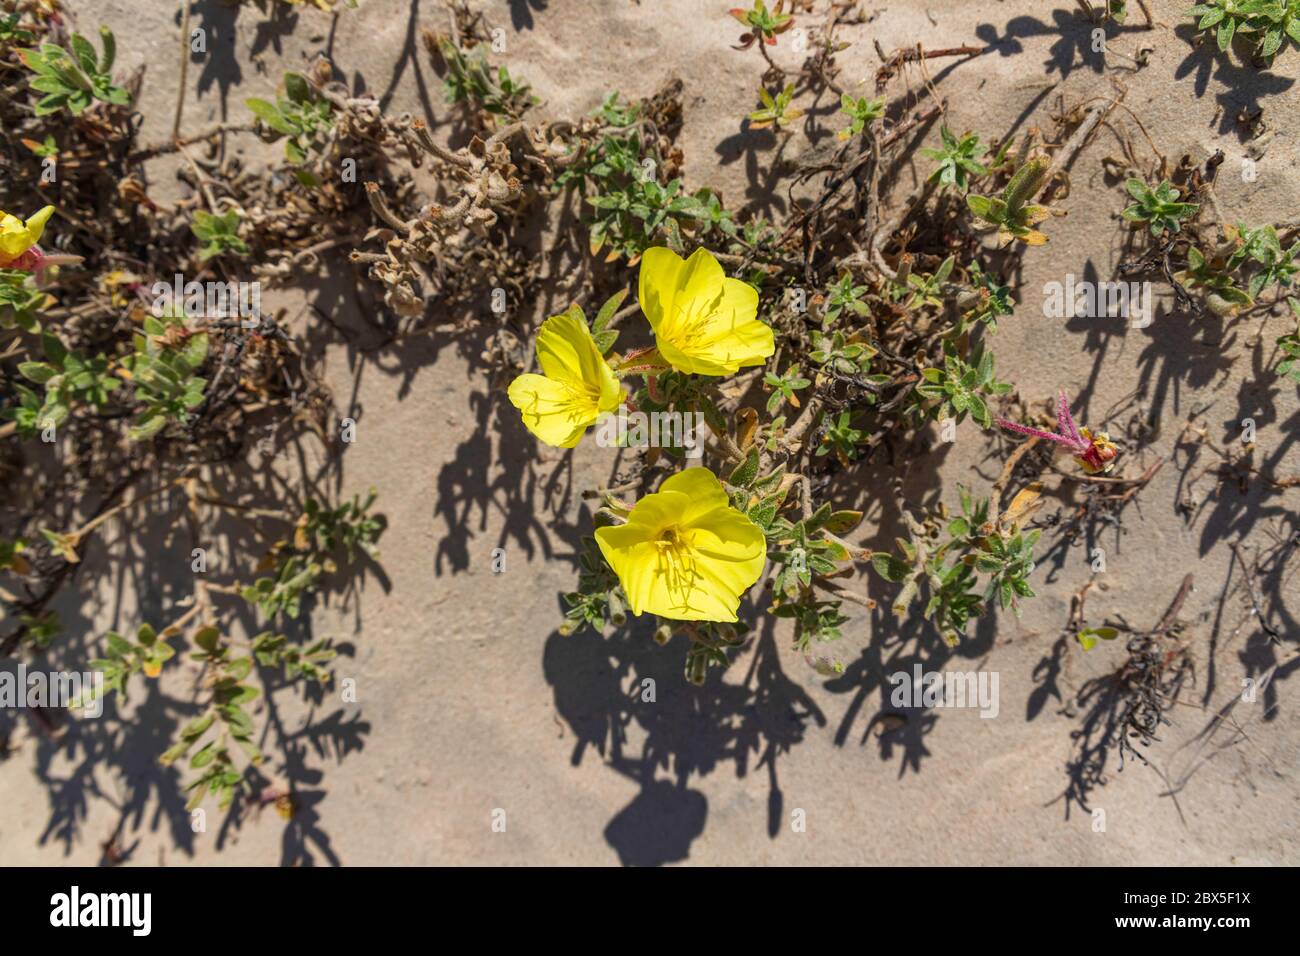 Top view of yellow flowers of beach evening primrose in the sand dunes. Oenothera drummondii. Israel Stock Photo